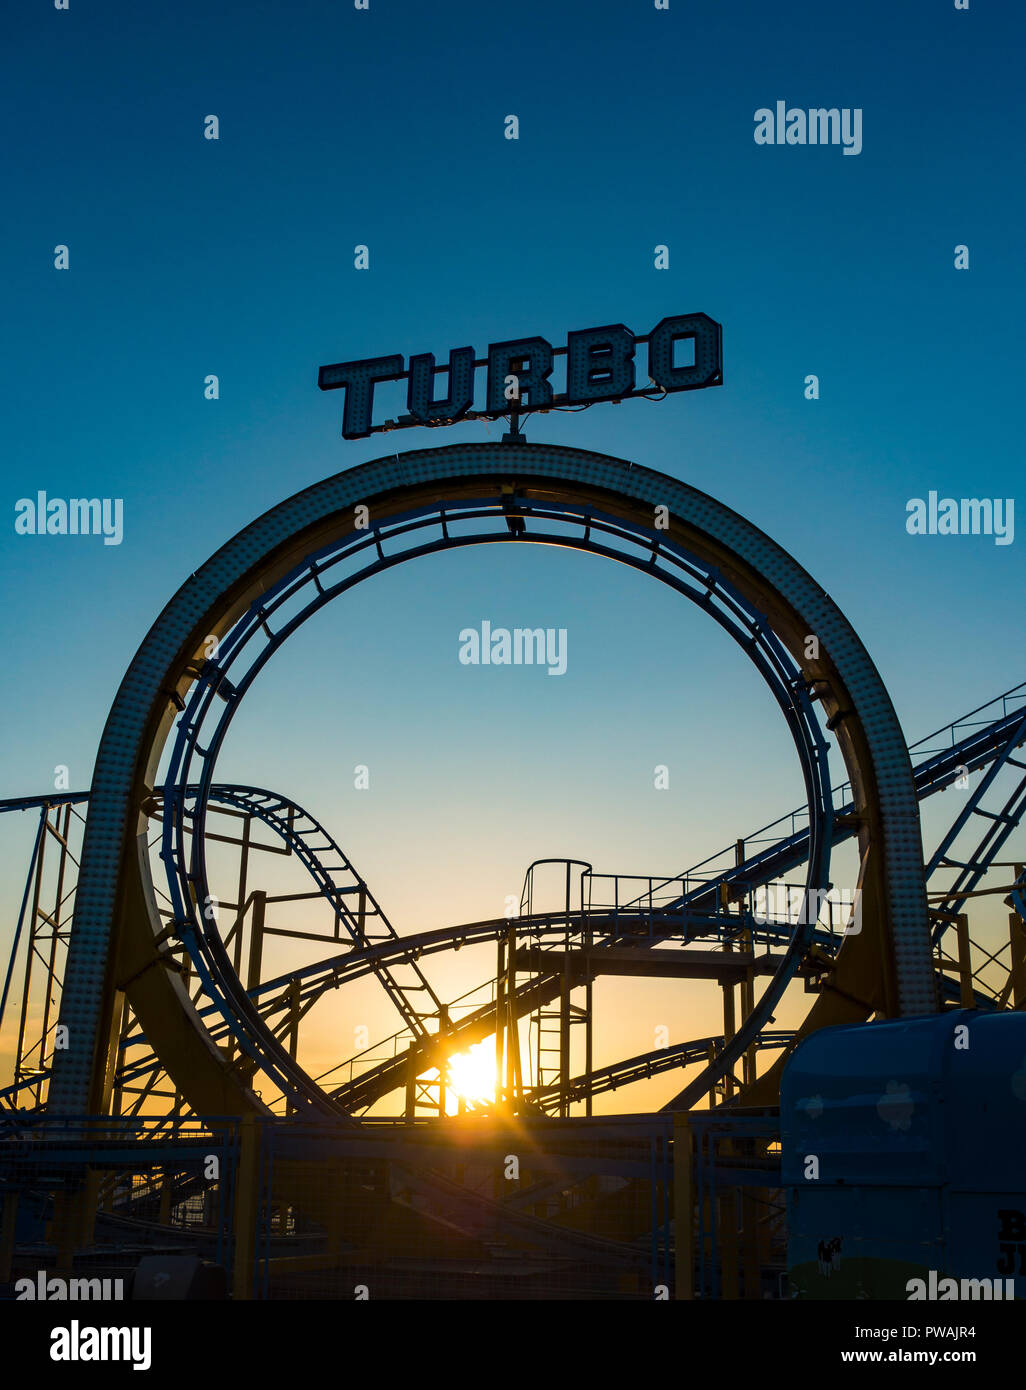 Turbo,Fairground Ride,Winter,Brighton Pier,Sunset,Brighton,Sussex,England Stock Photo